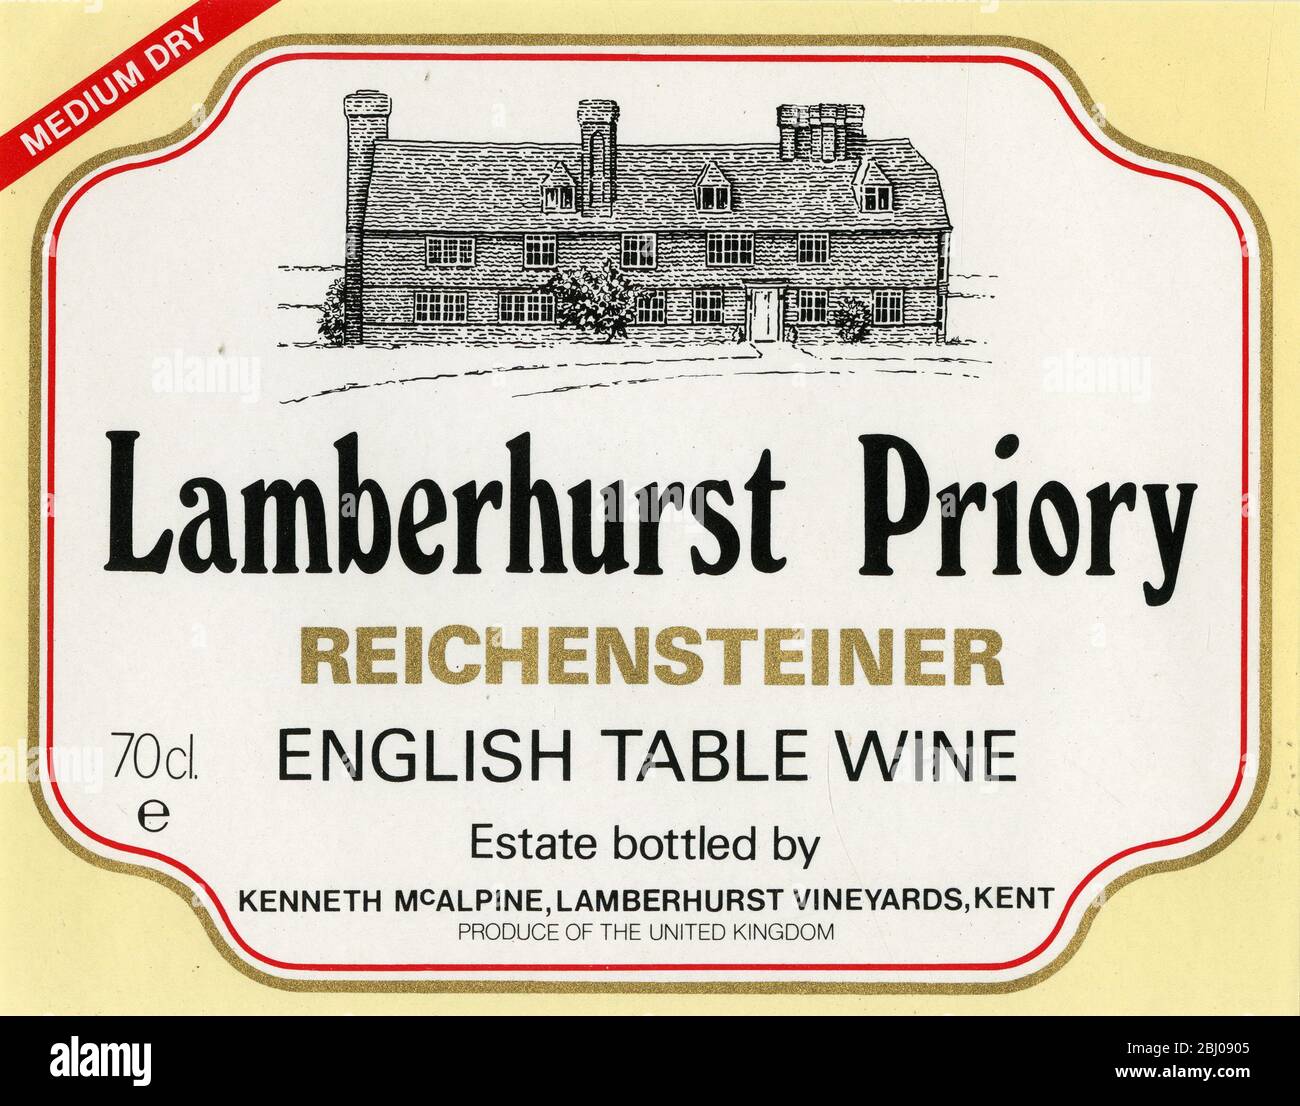 Wine Label - Lamberhurst Priory. A Reichensteiner vine variety English Table Wine. Estate bottled by Kenneth McAlpine, Lamberhurst Vineyards, Kent. - Stock Photo